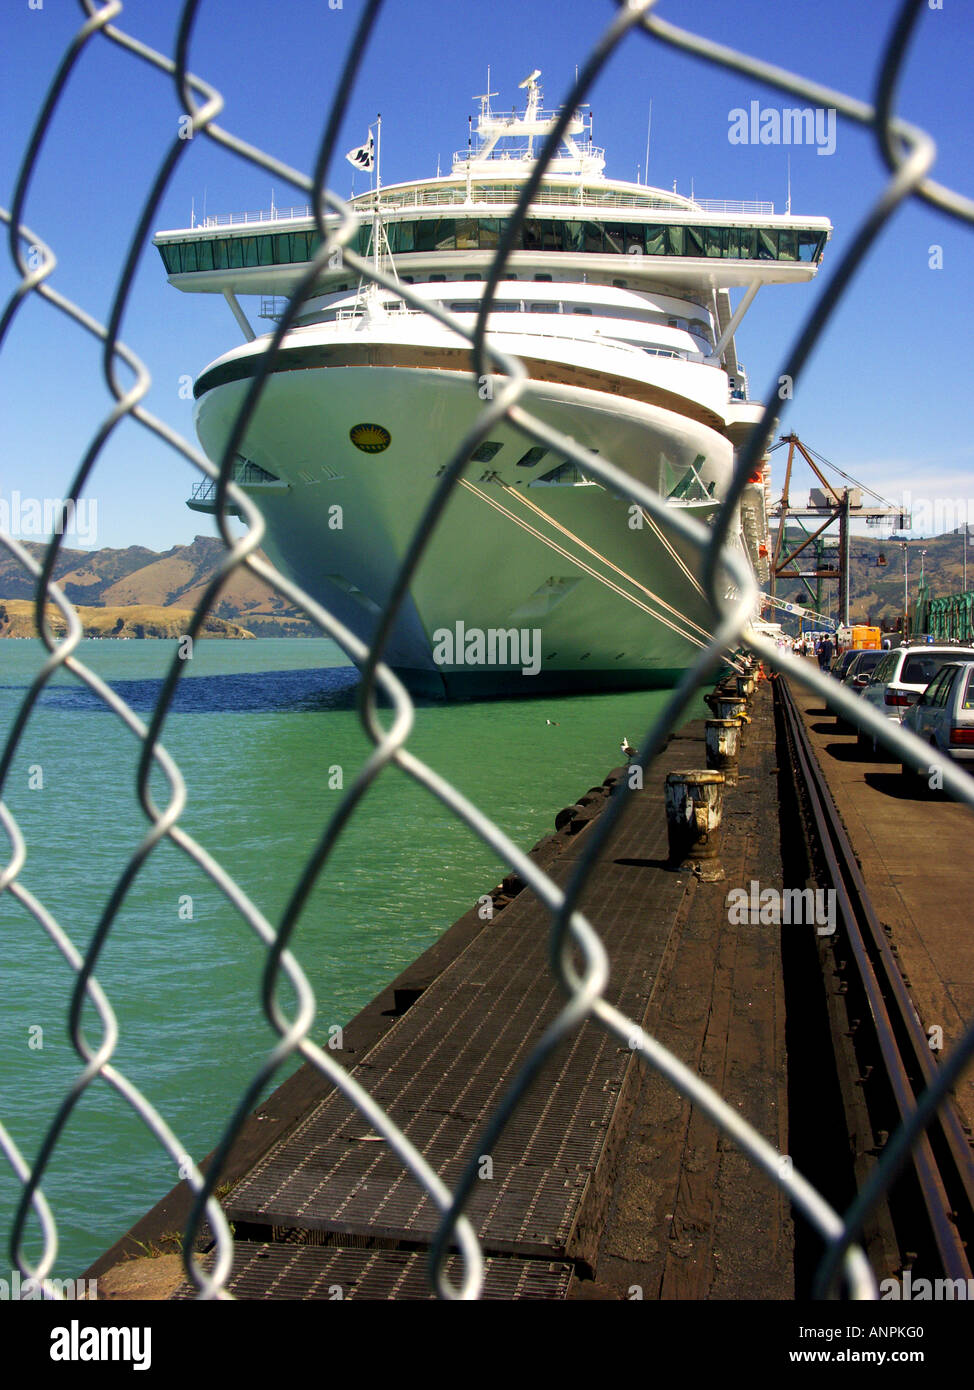 Cruise ship moored beyond security fence at Lyttelton, New Zealand. Stock Photo